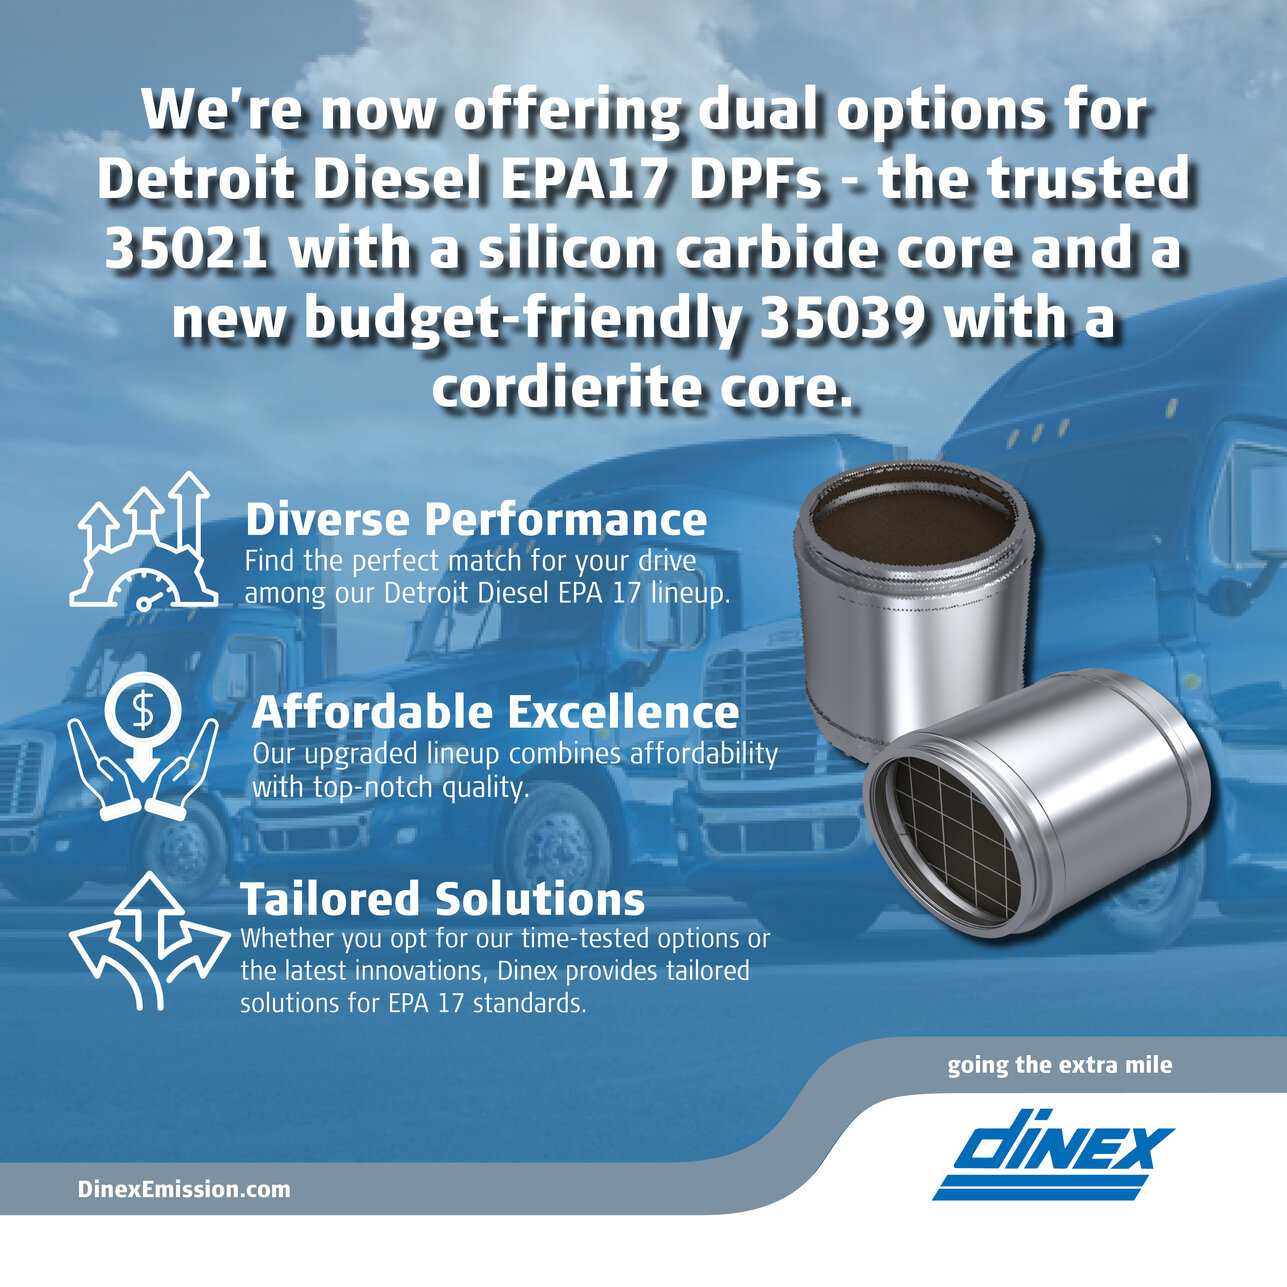 Dinex now offers dual options for Detroit Diesel EPA 17 DPFs